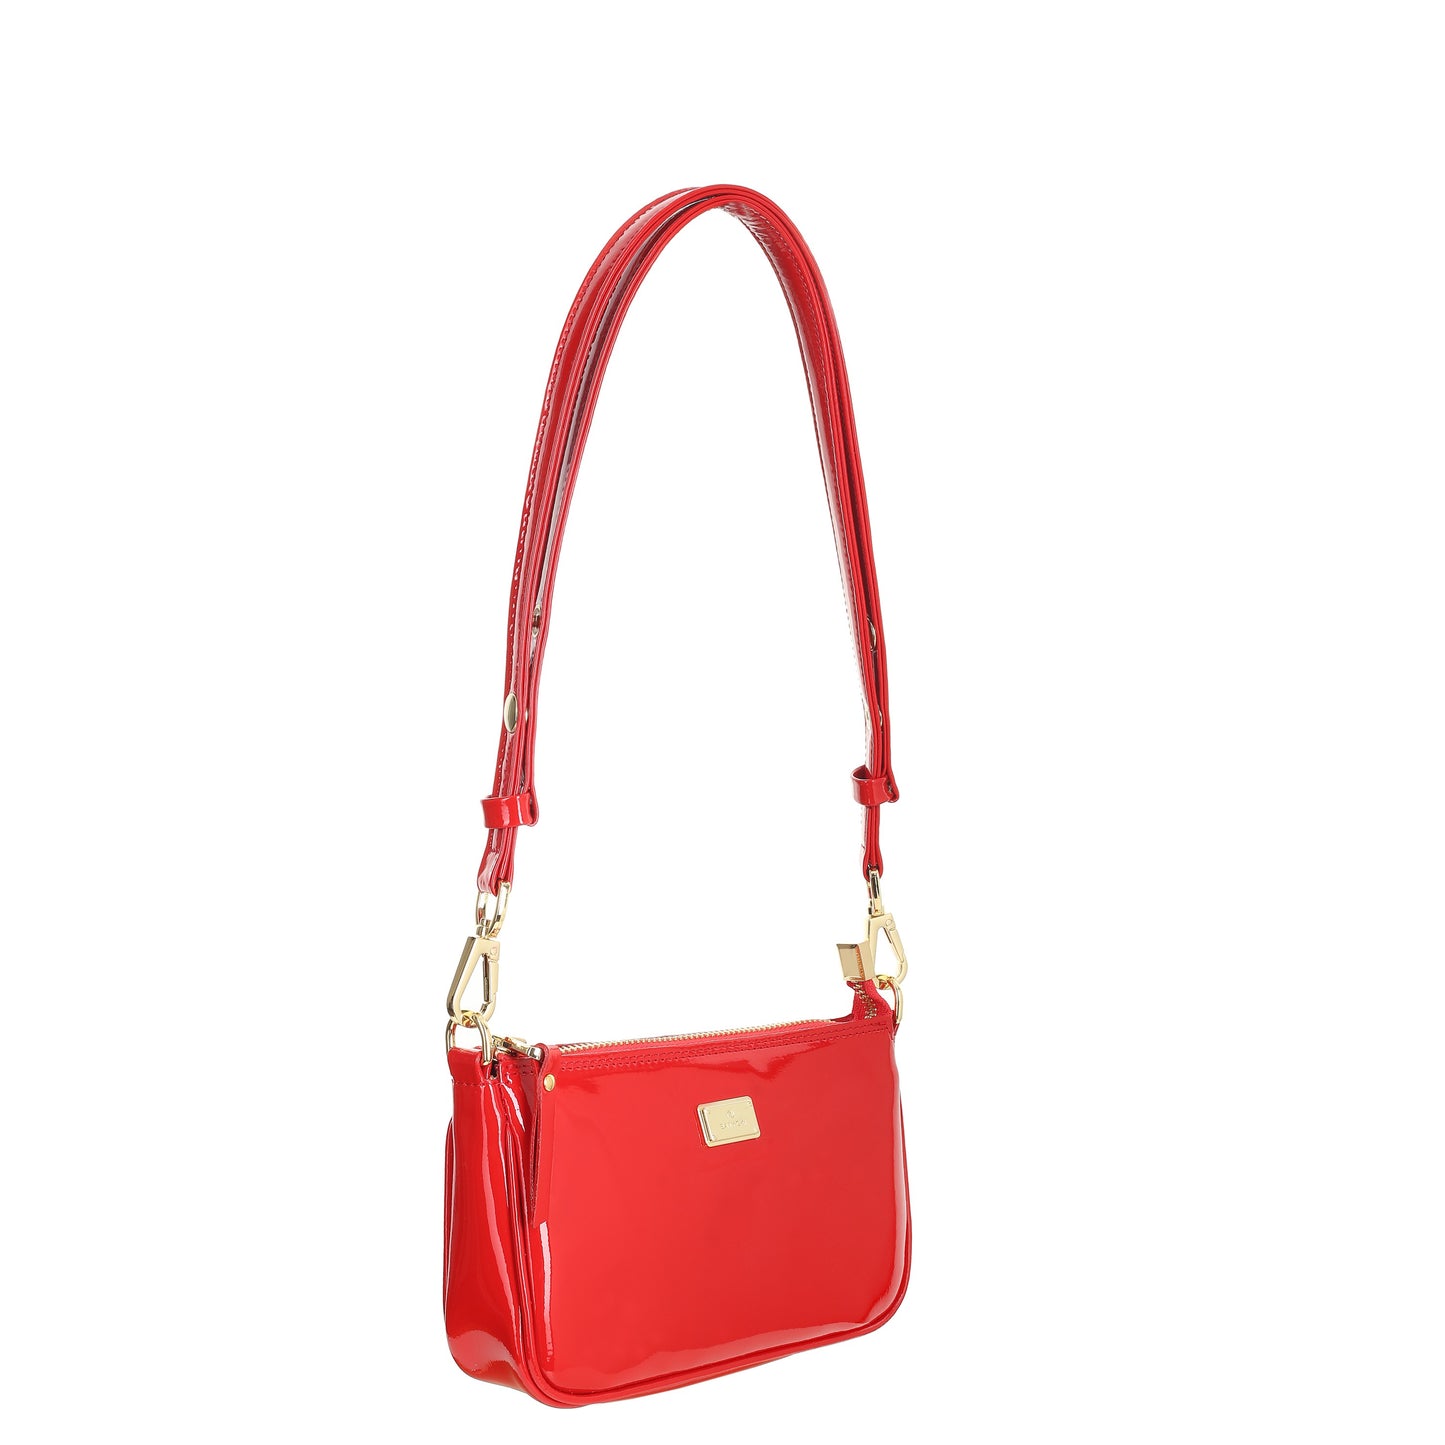 HARLEY MINI VERNICE RED women's leather handbag